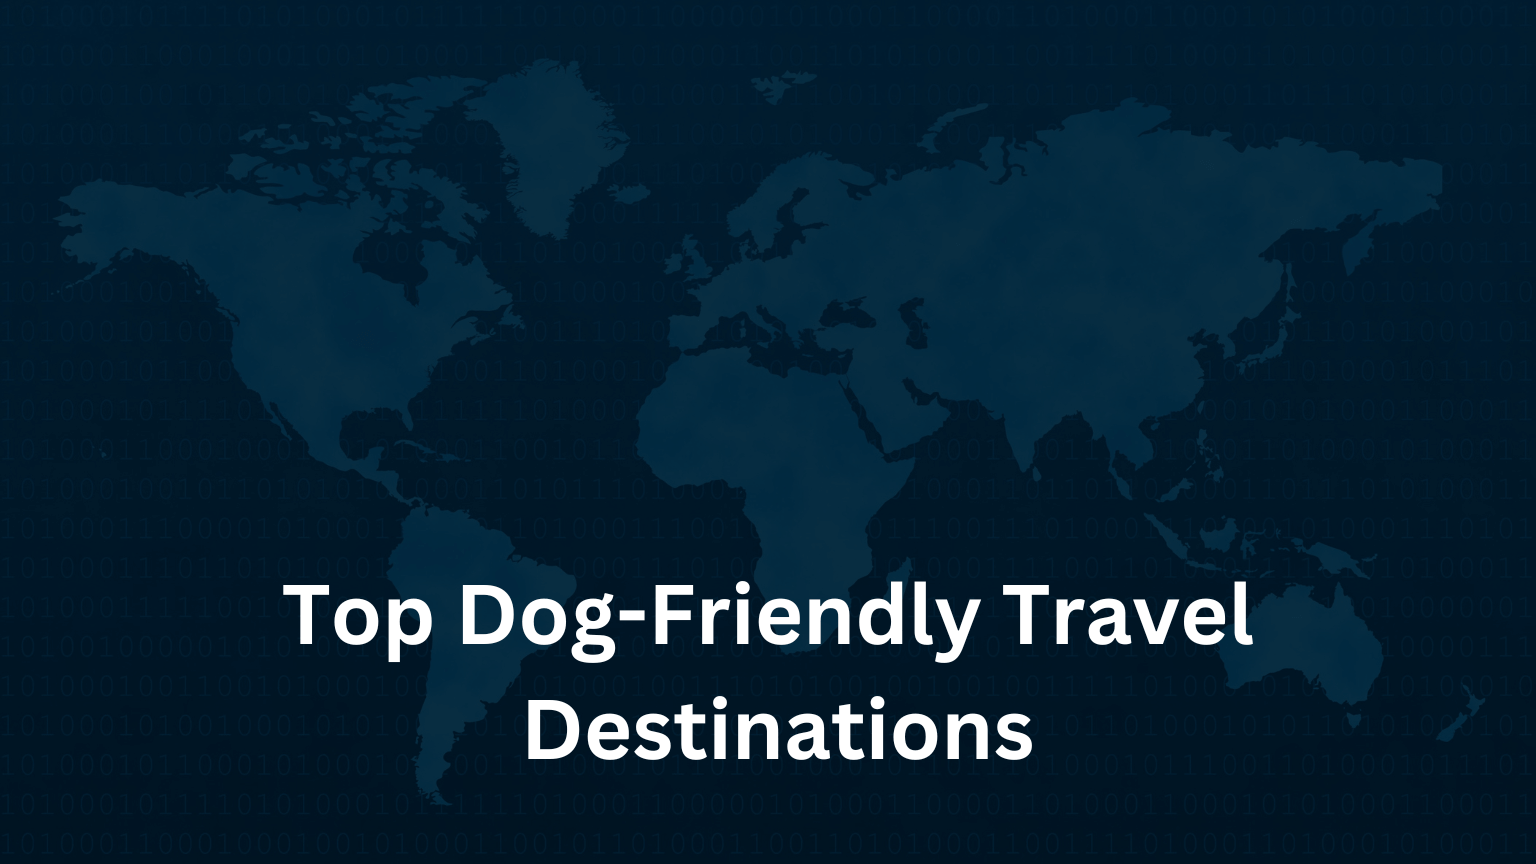 Top Dog-Friendly Travel Destinations